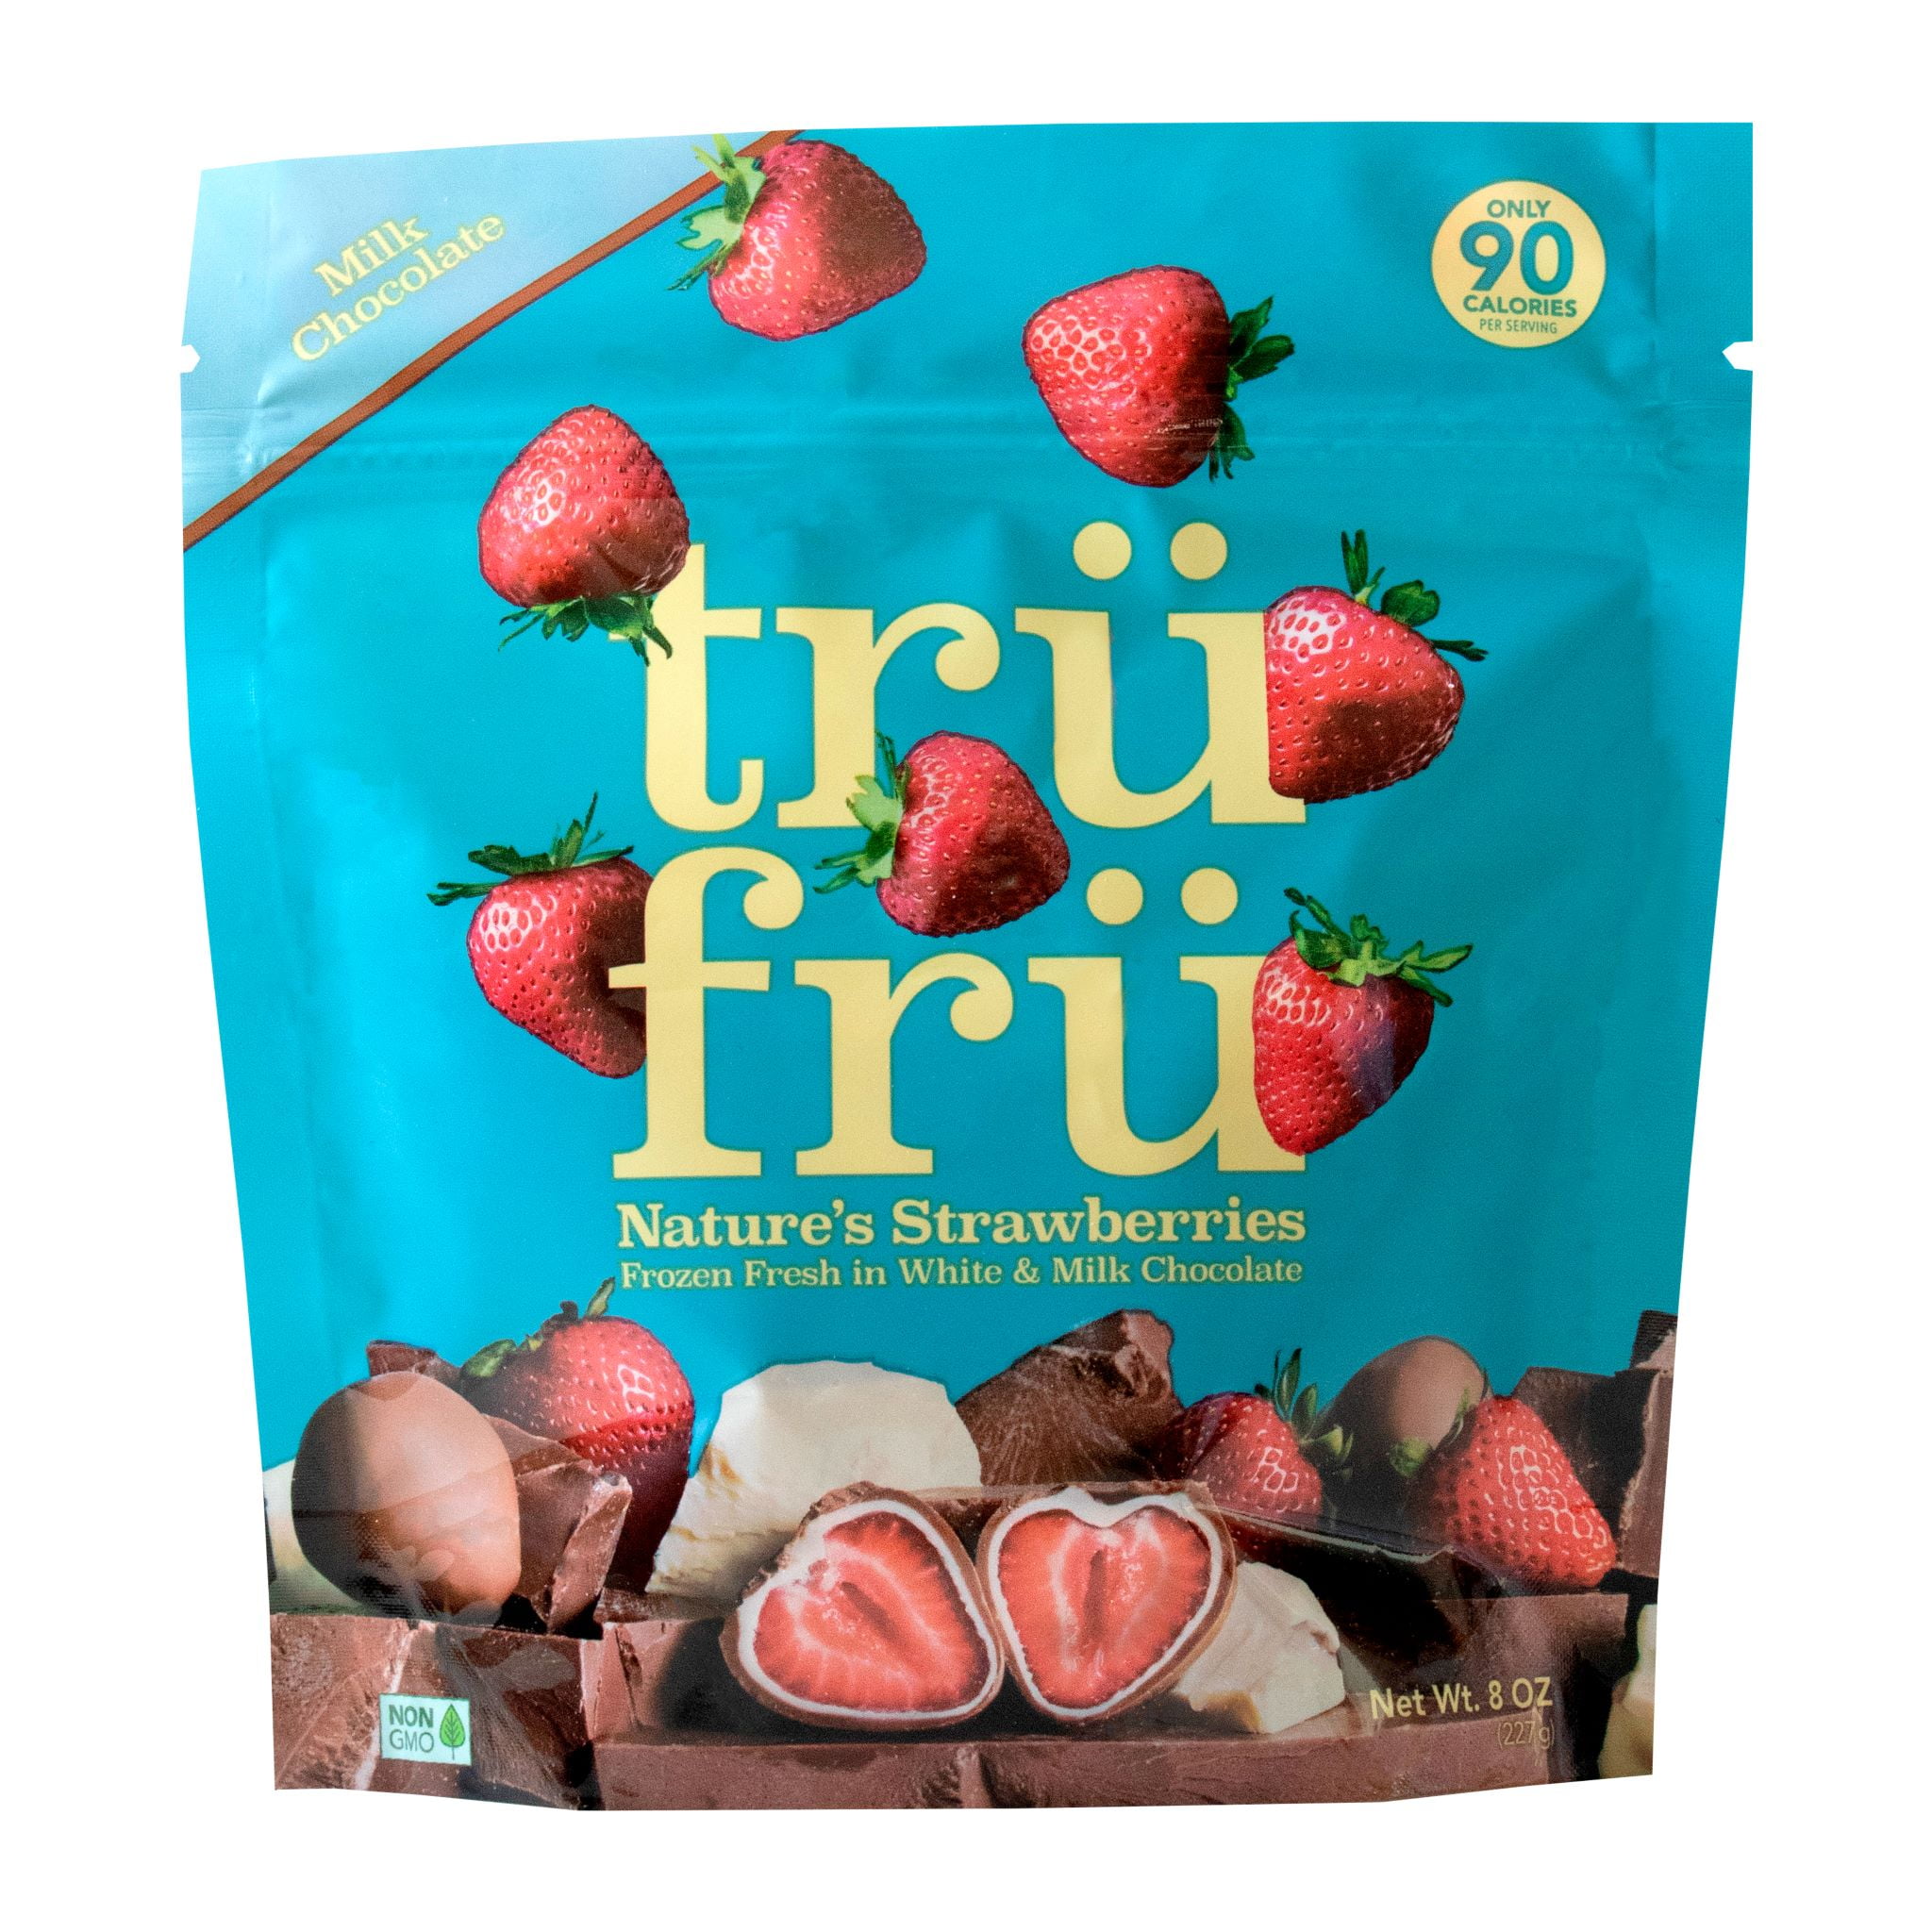 Strawberries Crème 4.2 oz - TruFru